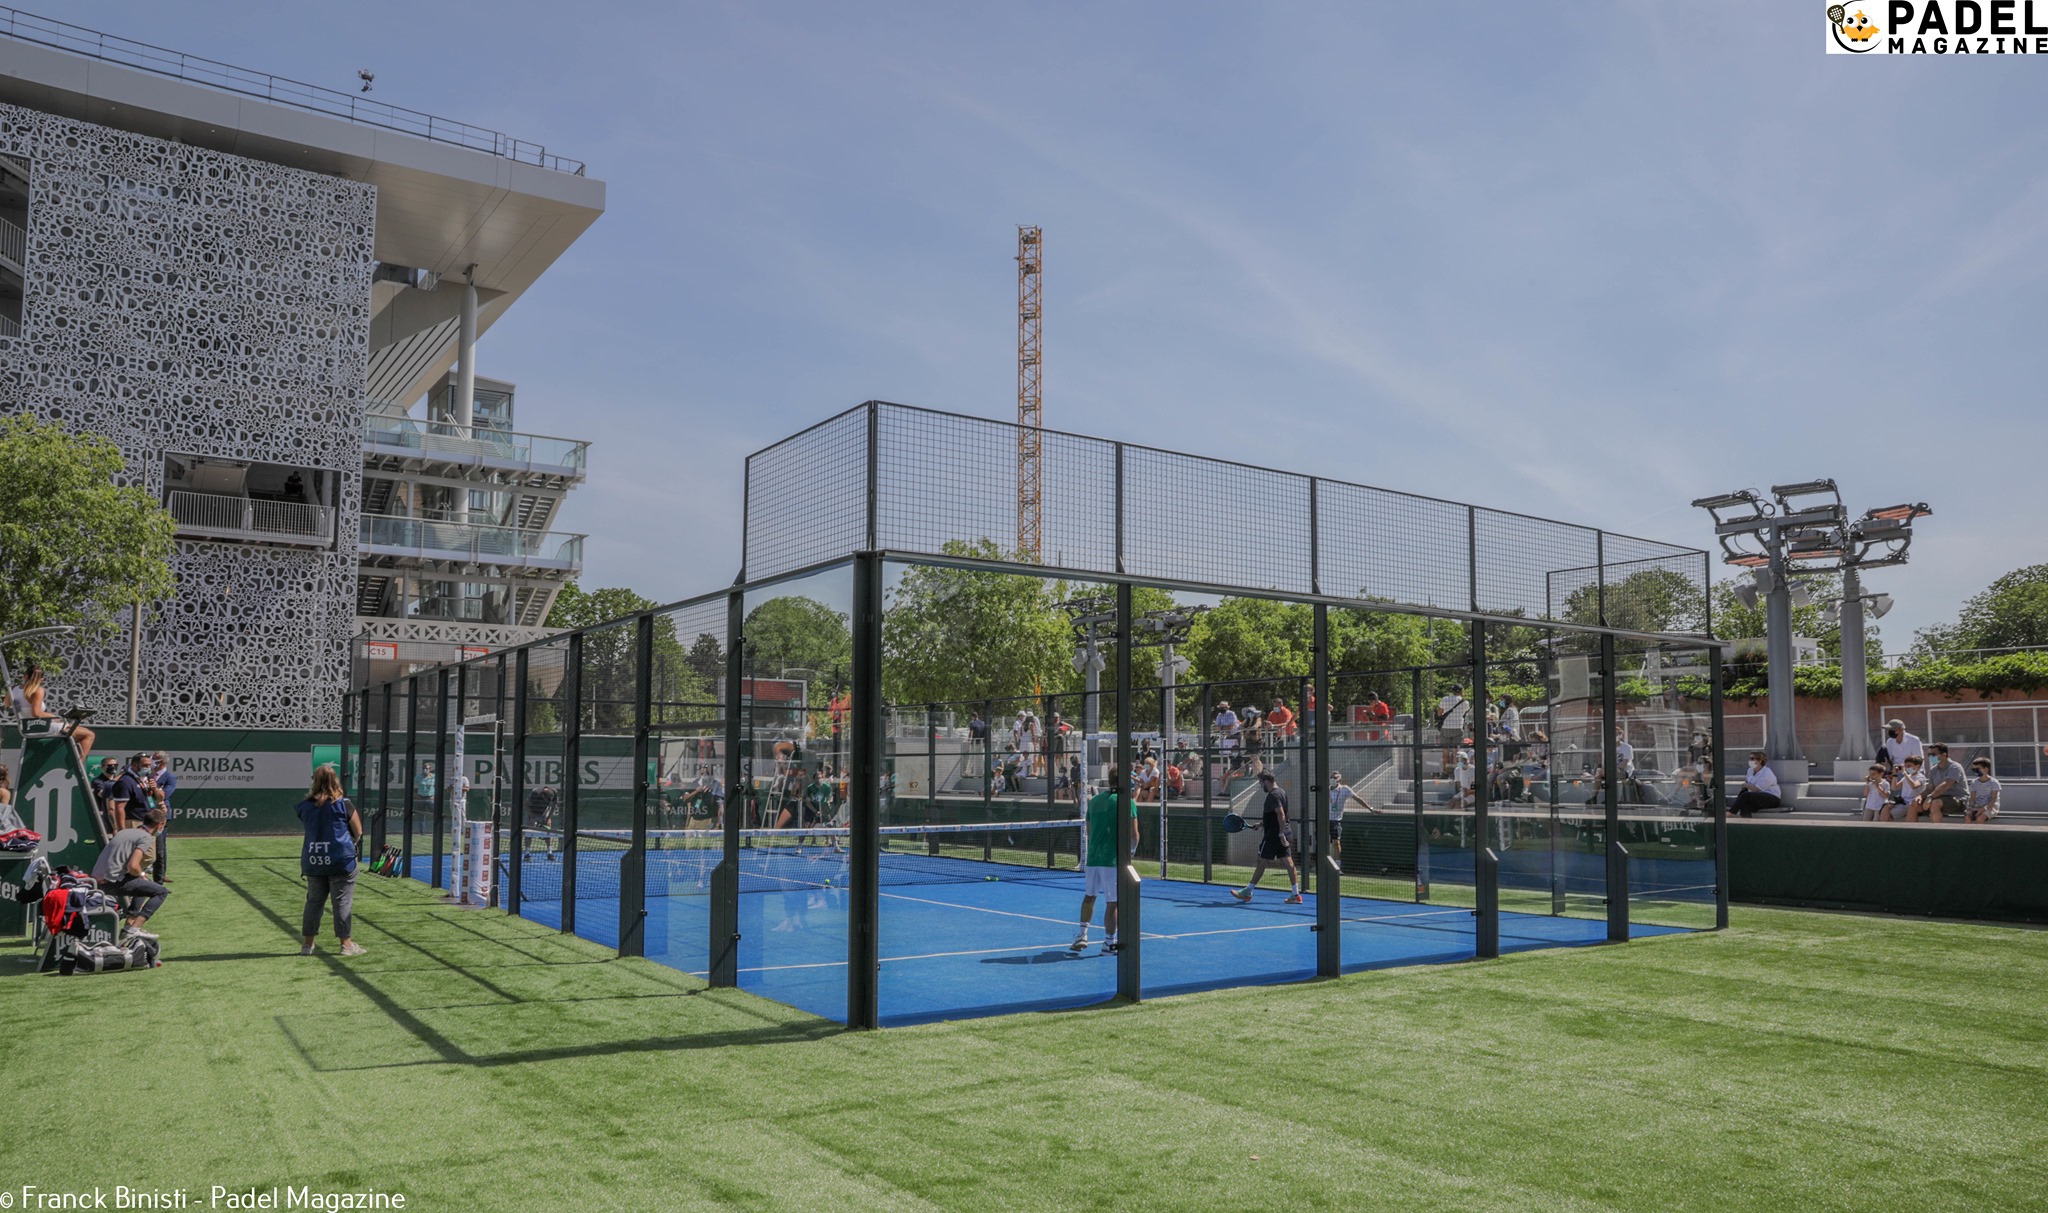 Roland Garros - Padel 2022: what improvements?